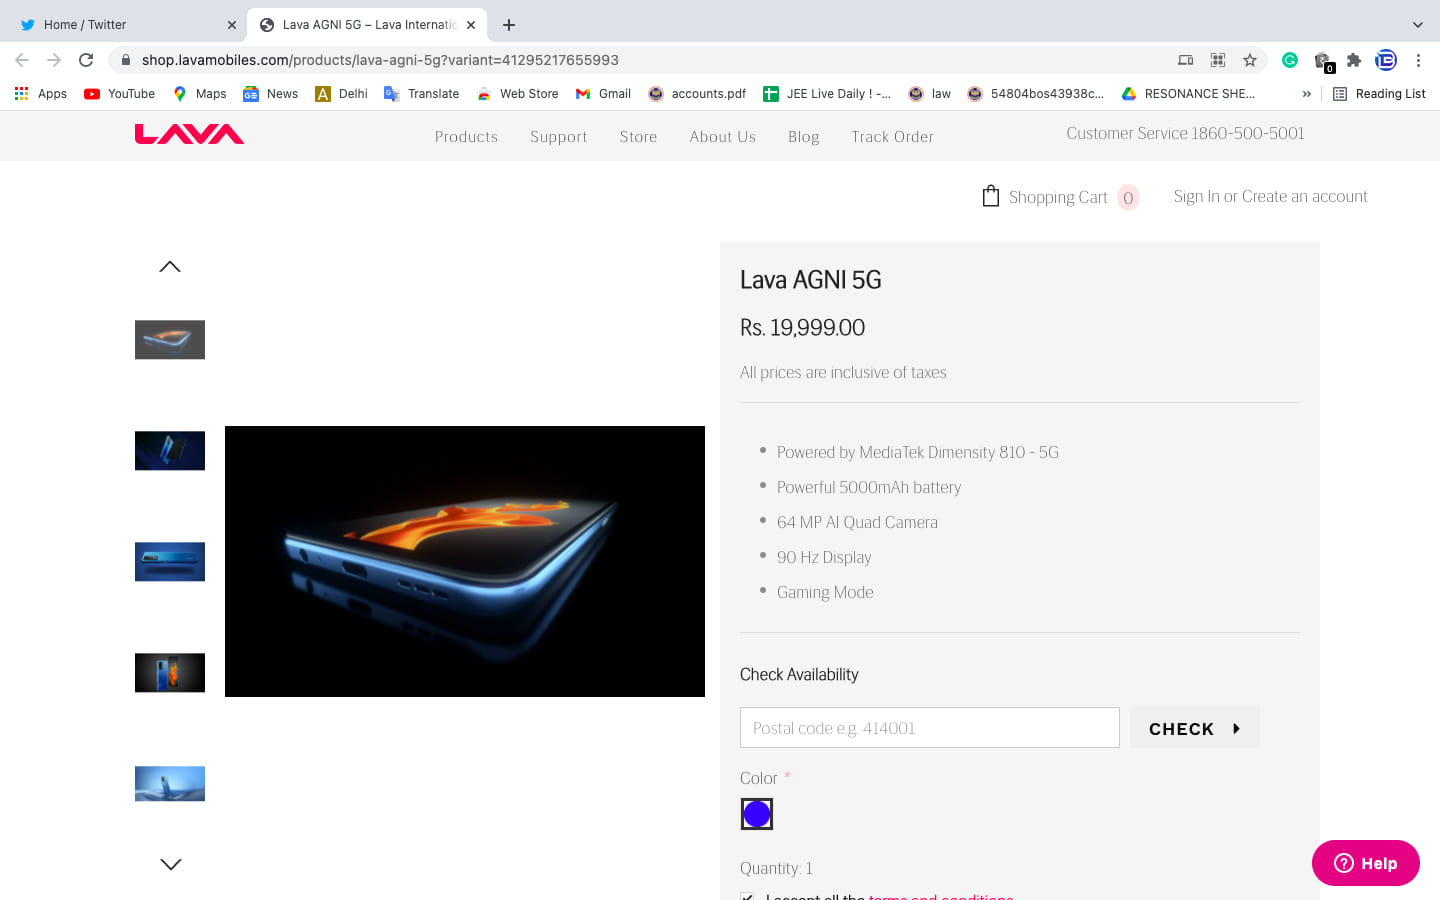 Lava Agni 5G priced at Rs 19,999